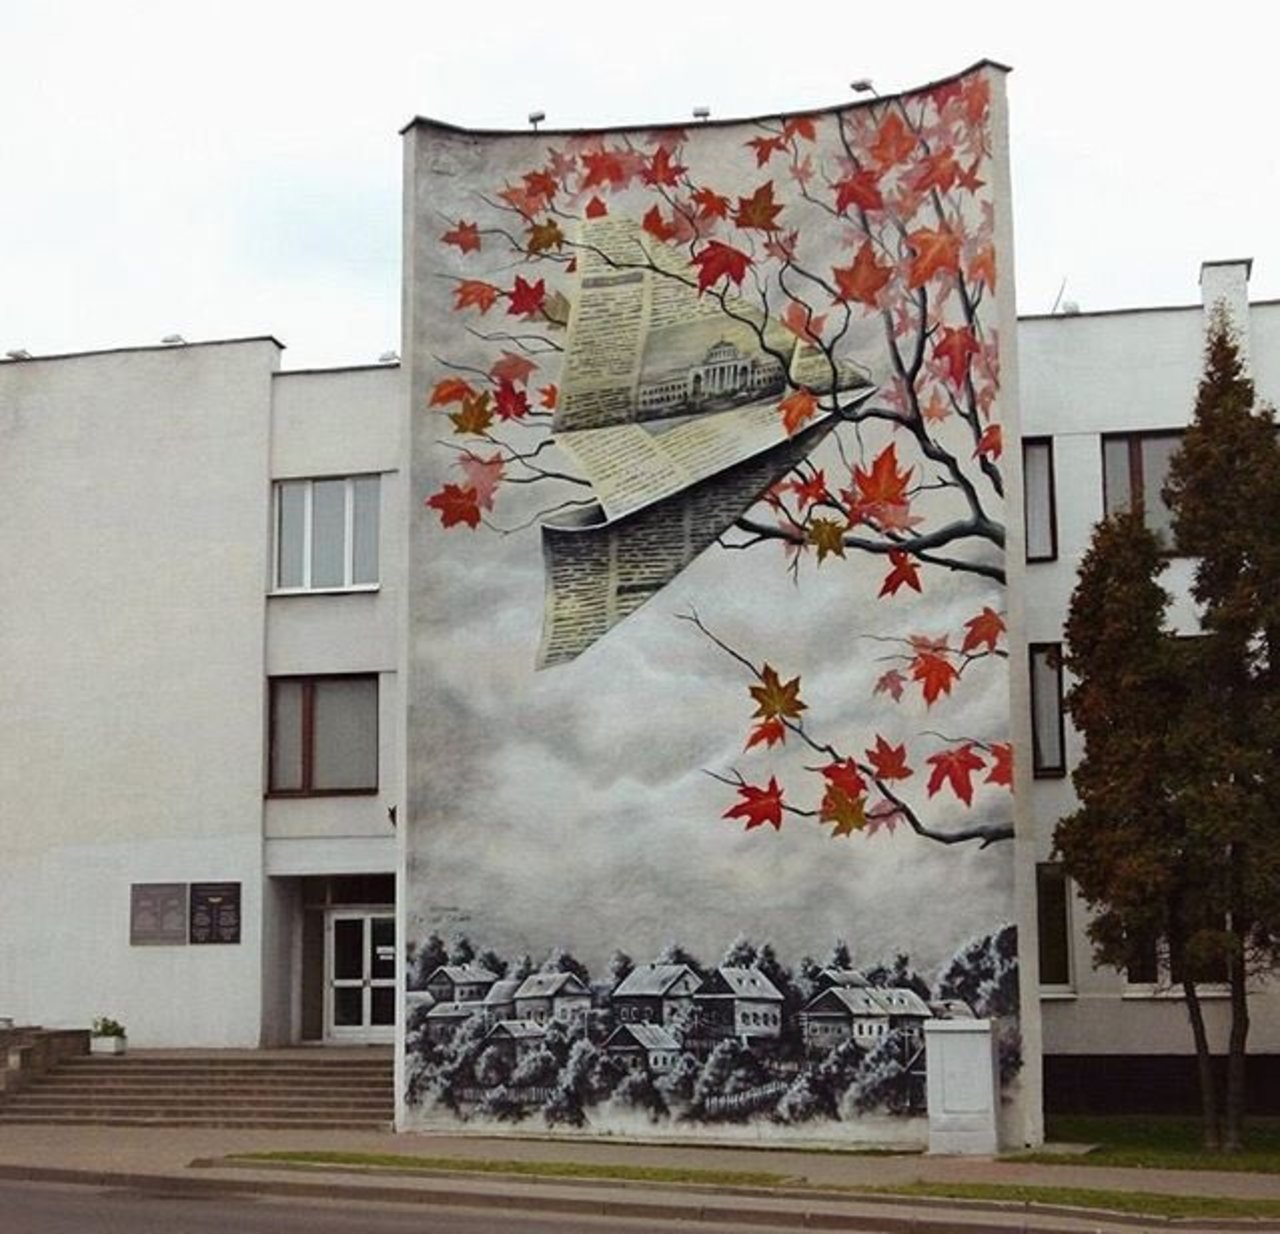 New Street Art by MUTUS in Belarus 

#art #graffiti #mural #streetart https://t.co/k42dEkJug3